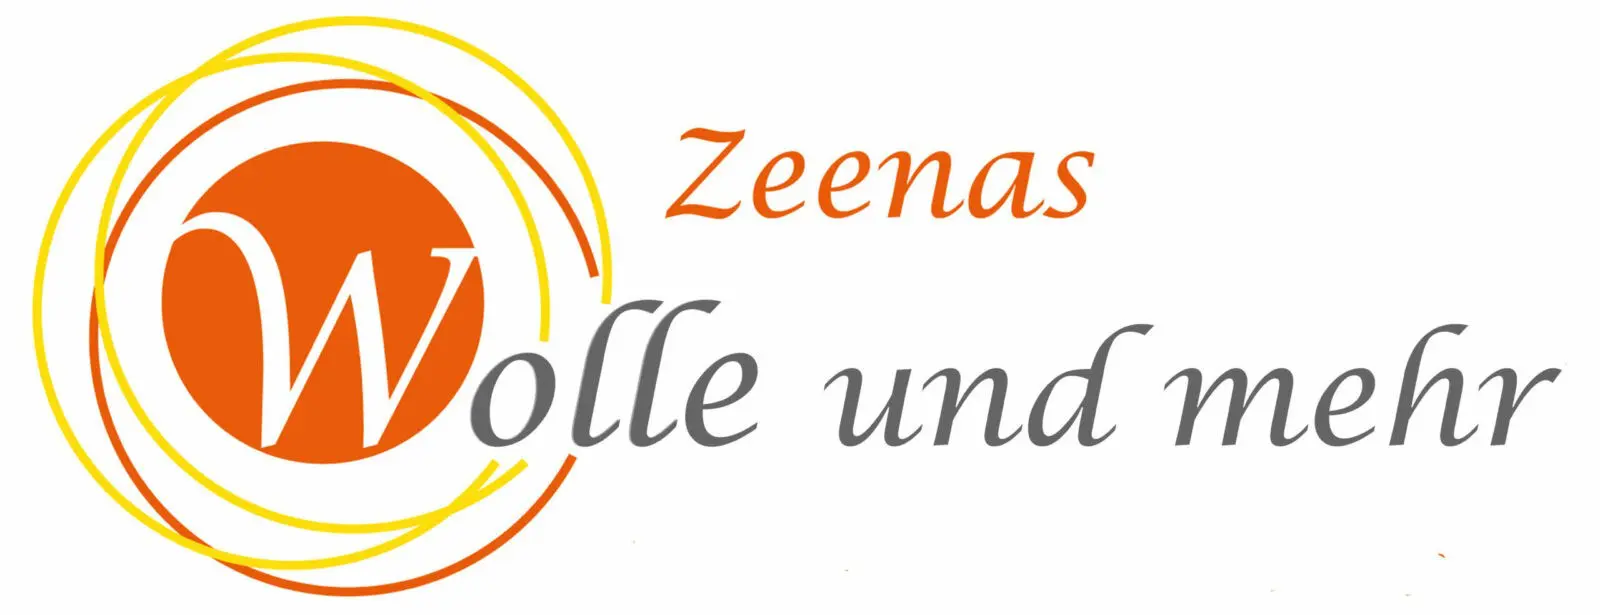 cropped-220422-Logo-Zeenas-scaled-1.jpg